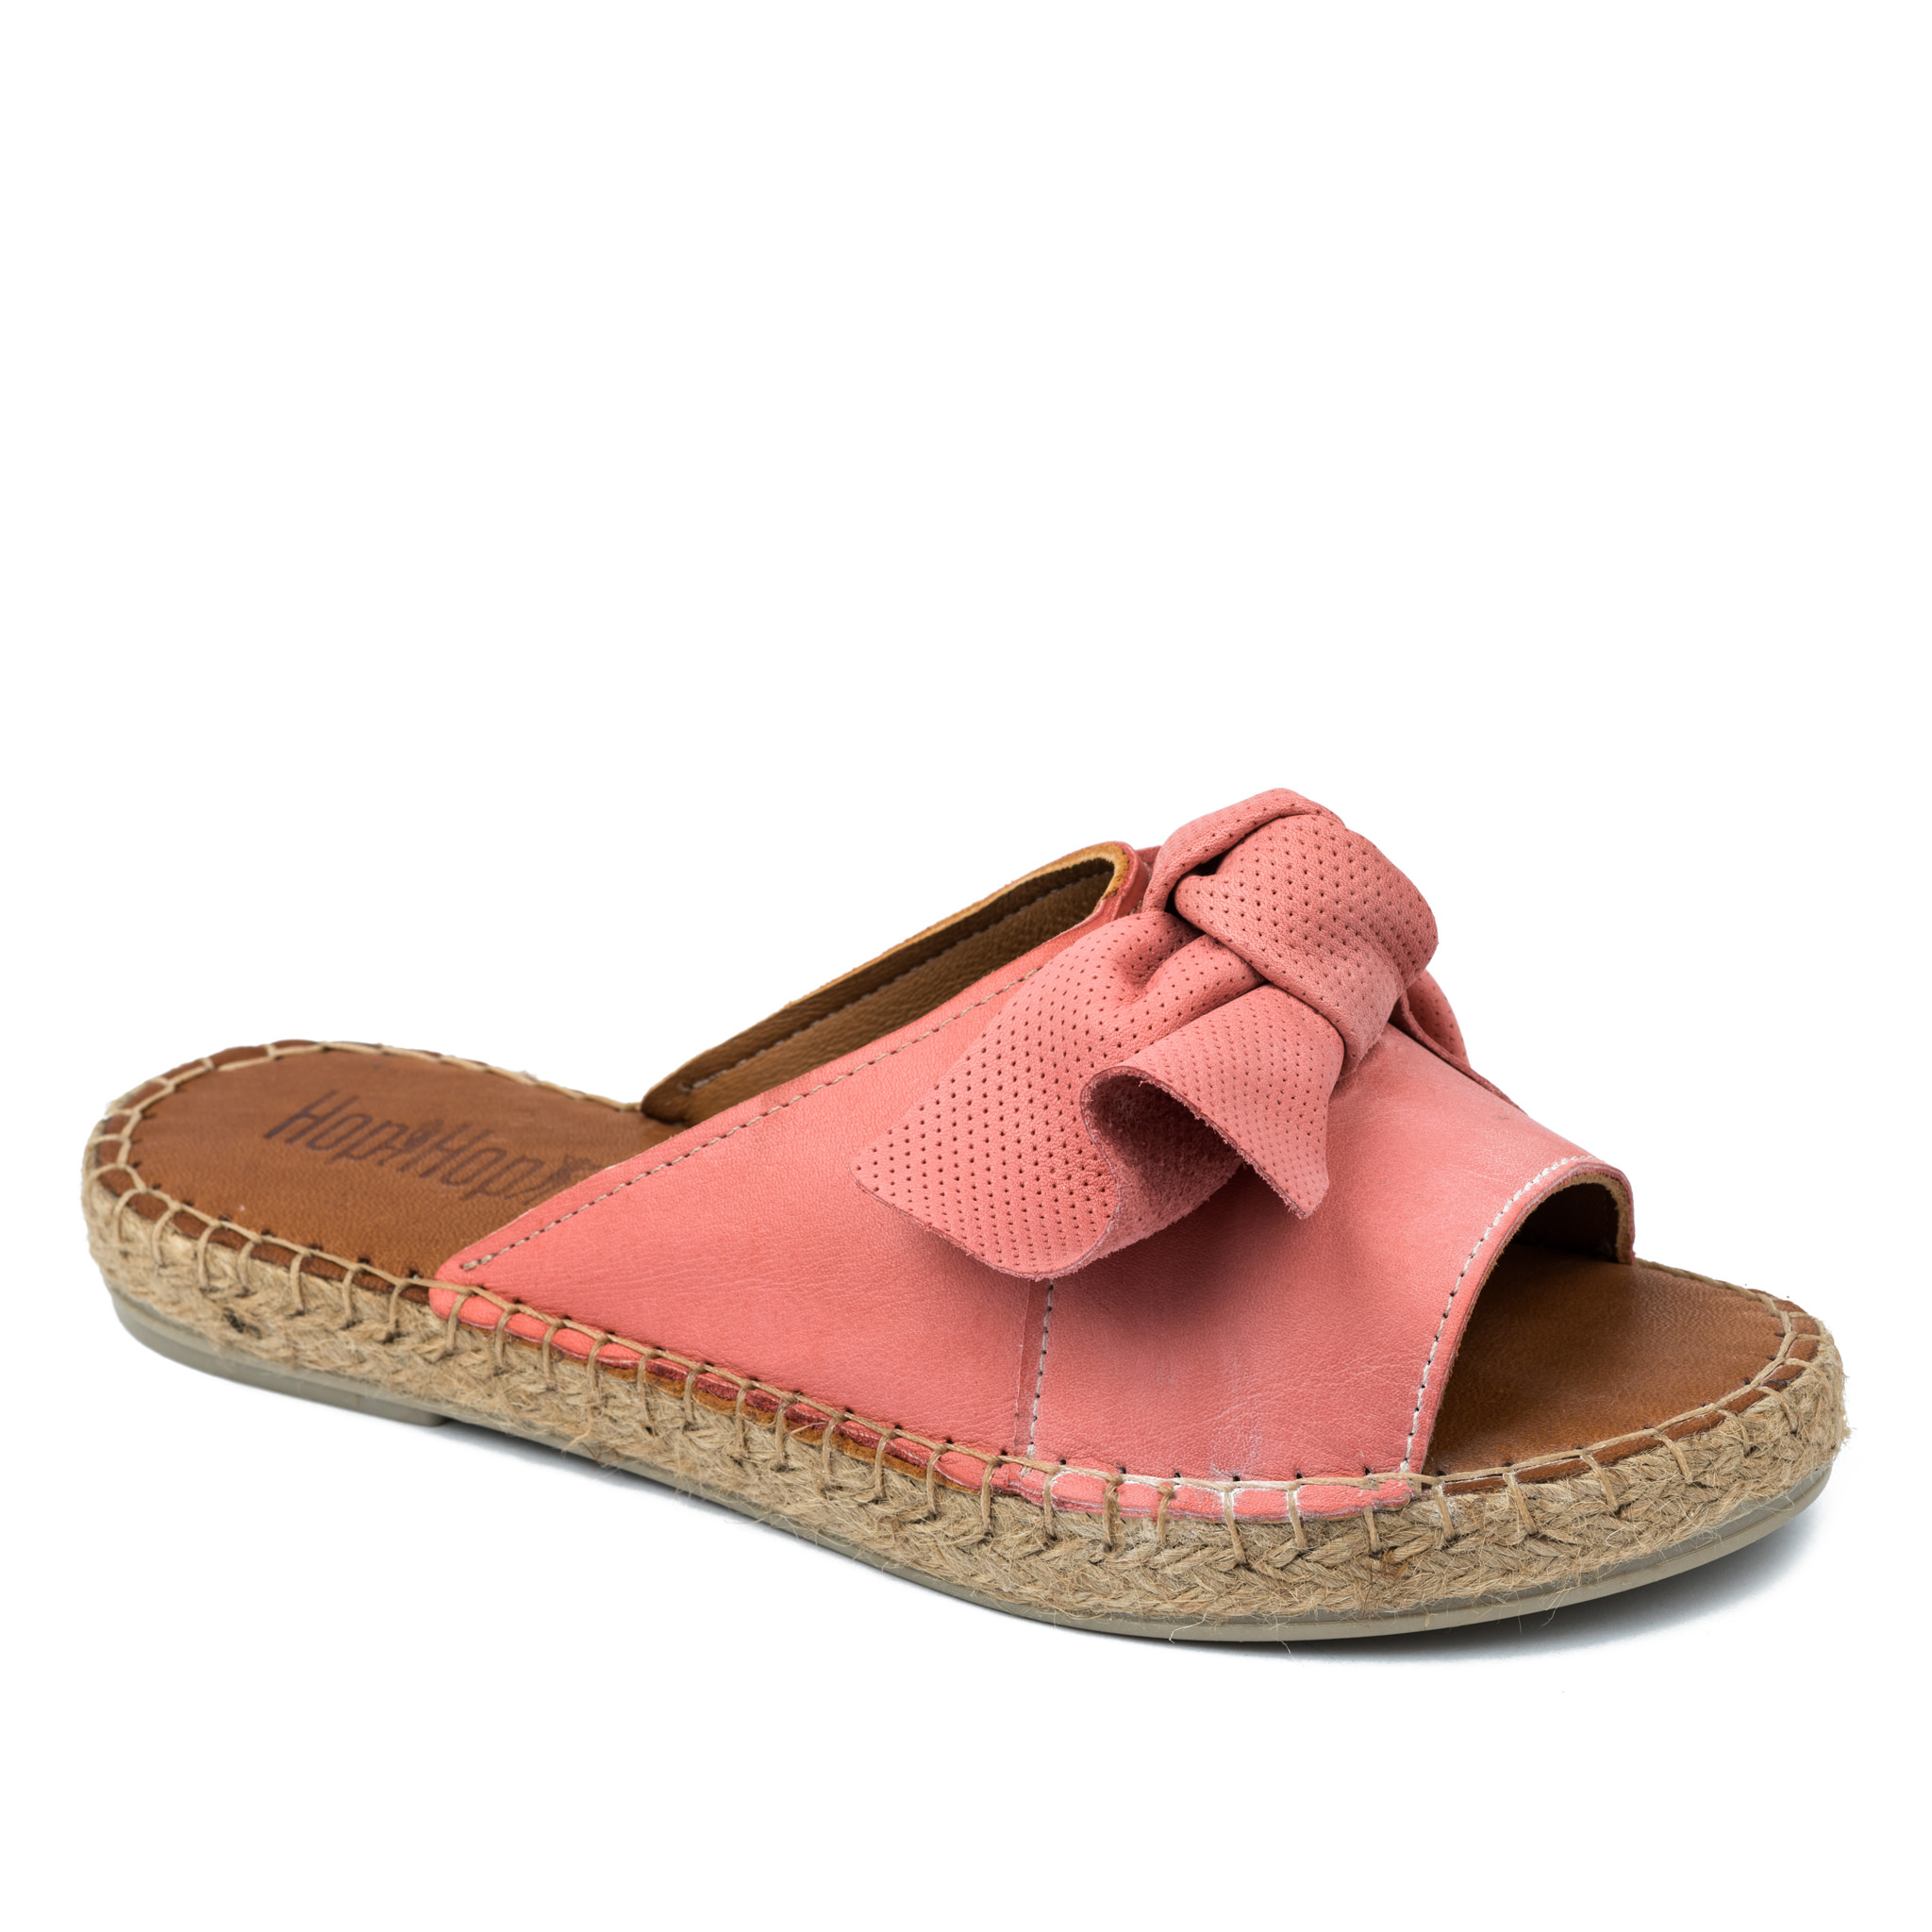 Leather slippers DOINA - ROSE